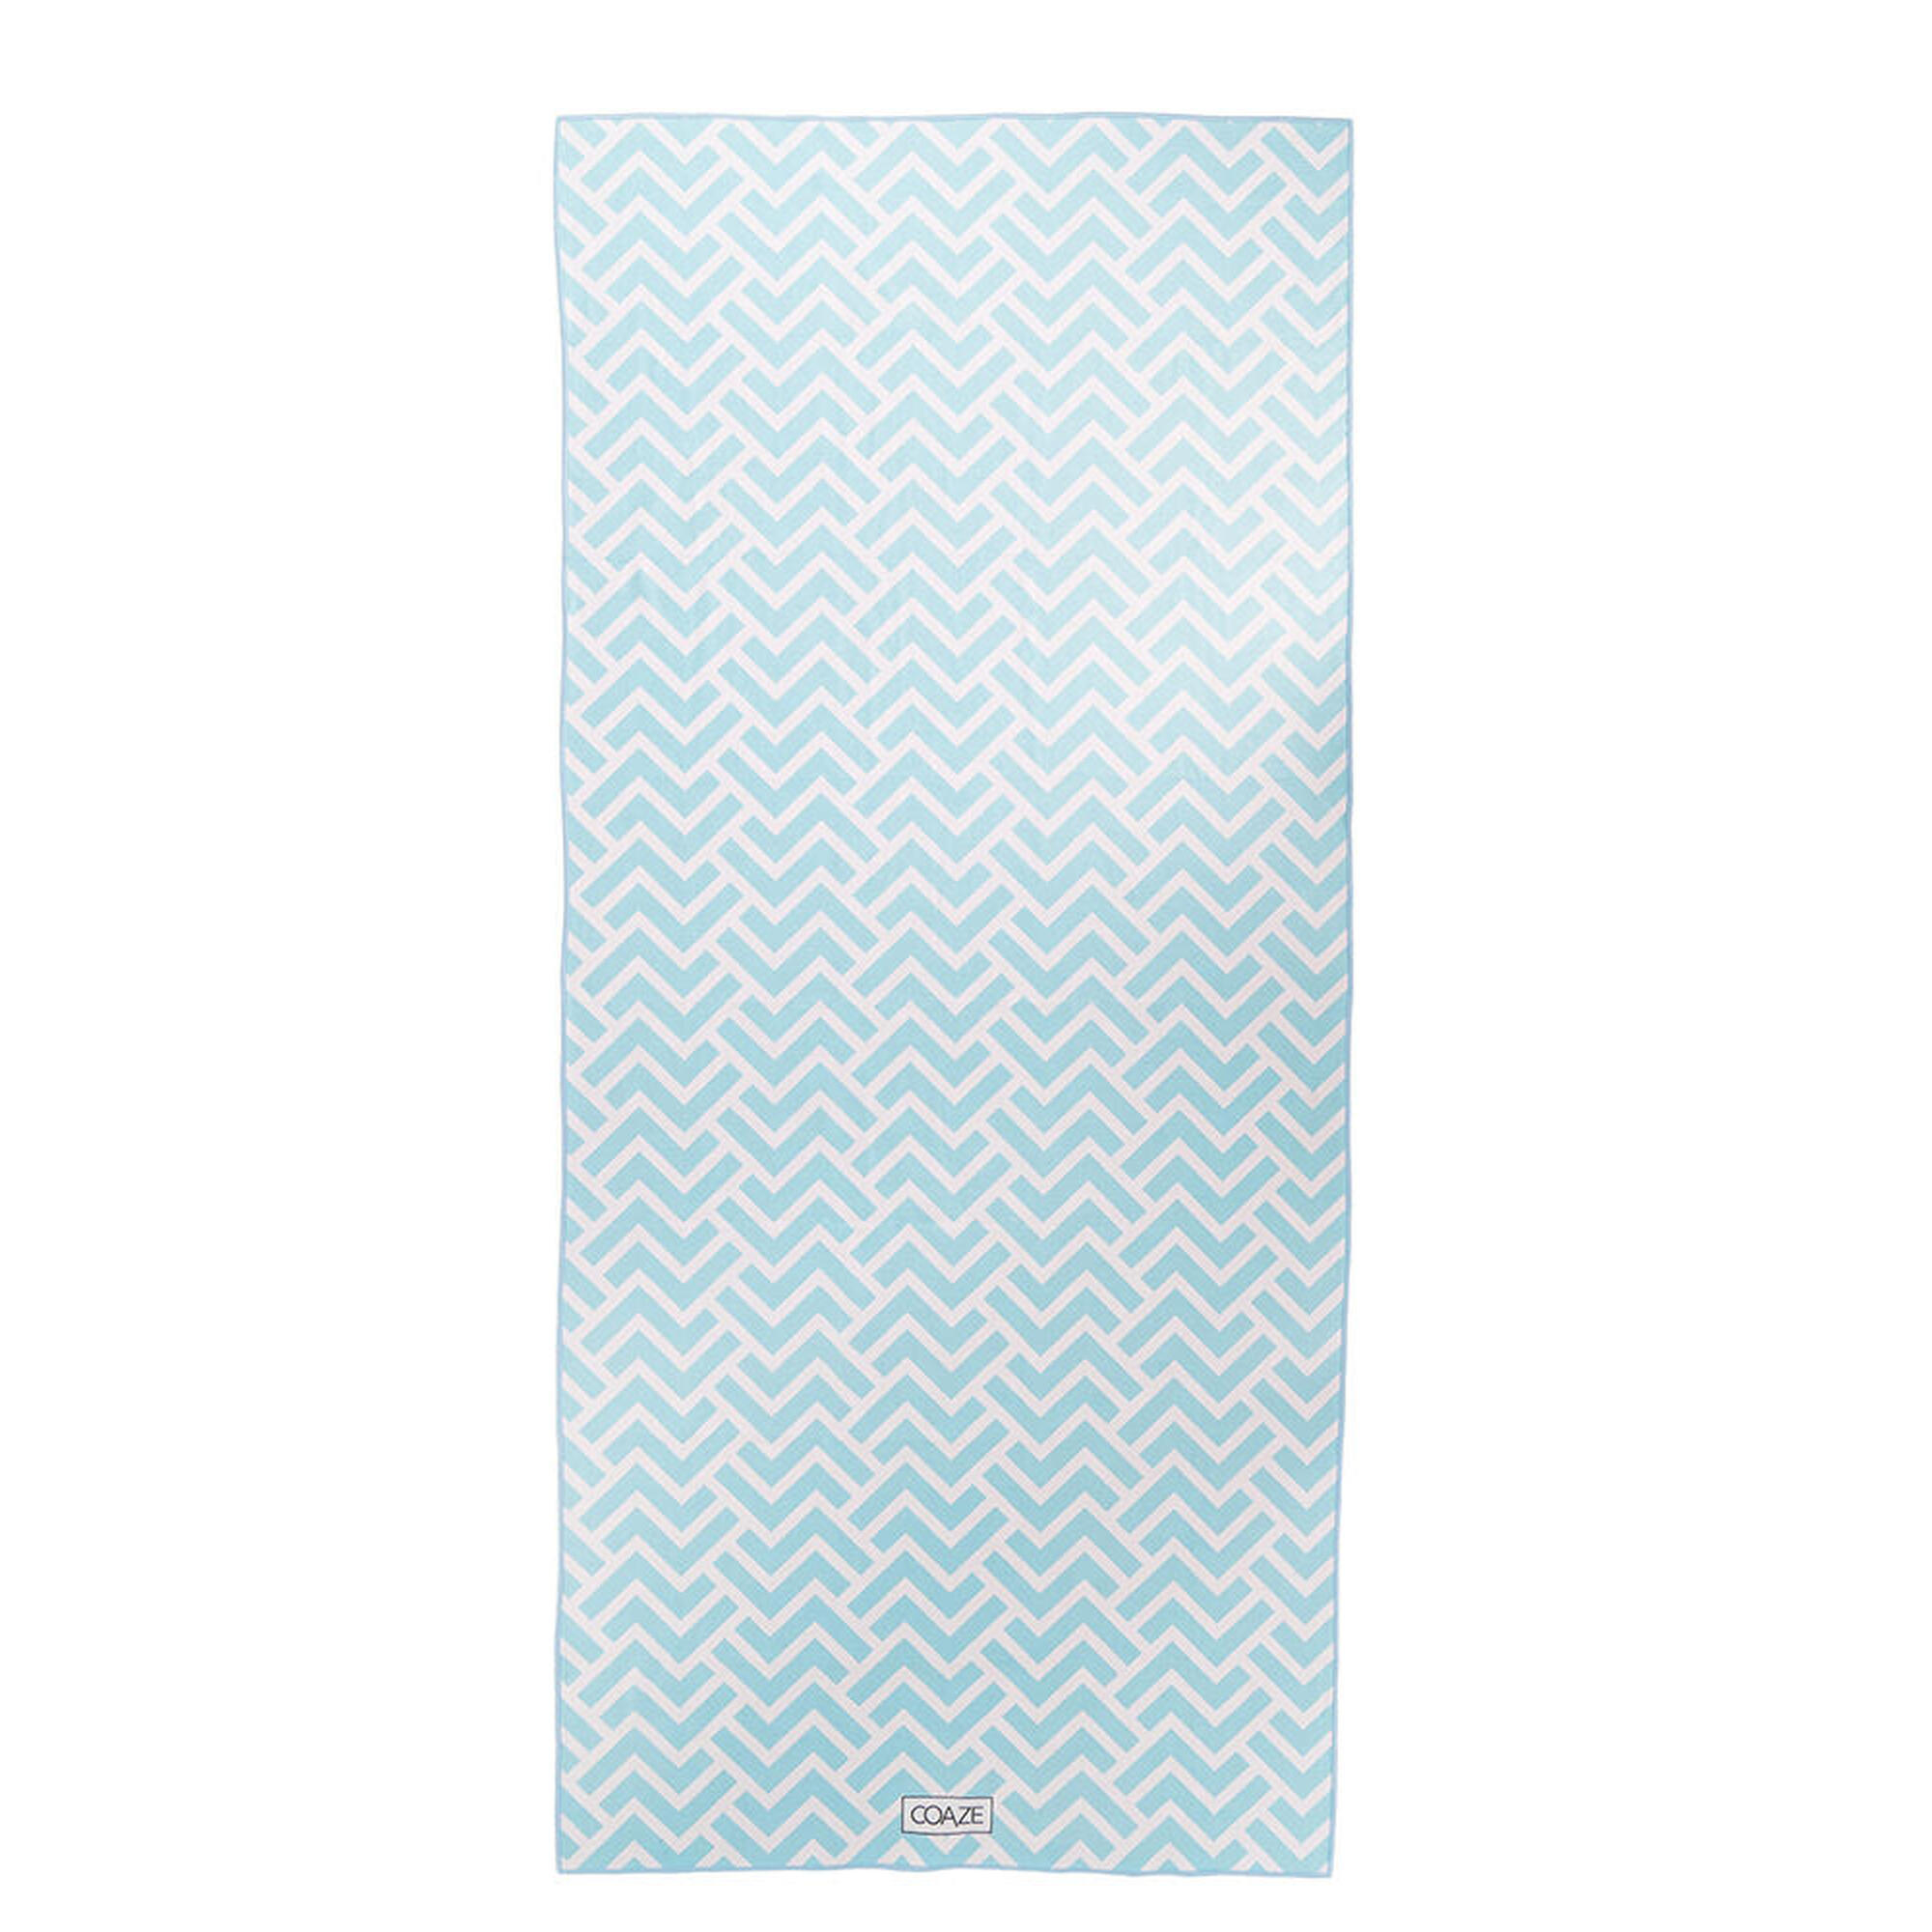 Unisex Sand Proof Sports Towel - Zagtile (Blue)